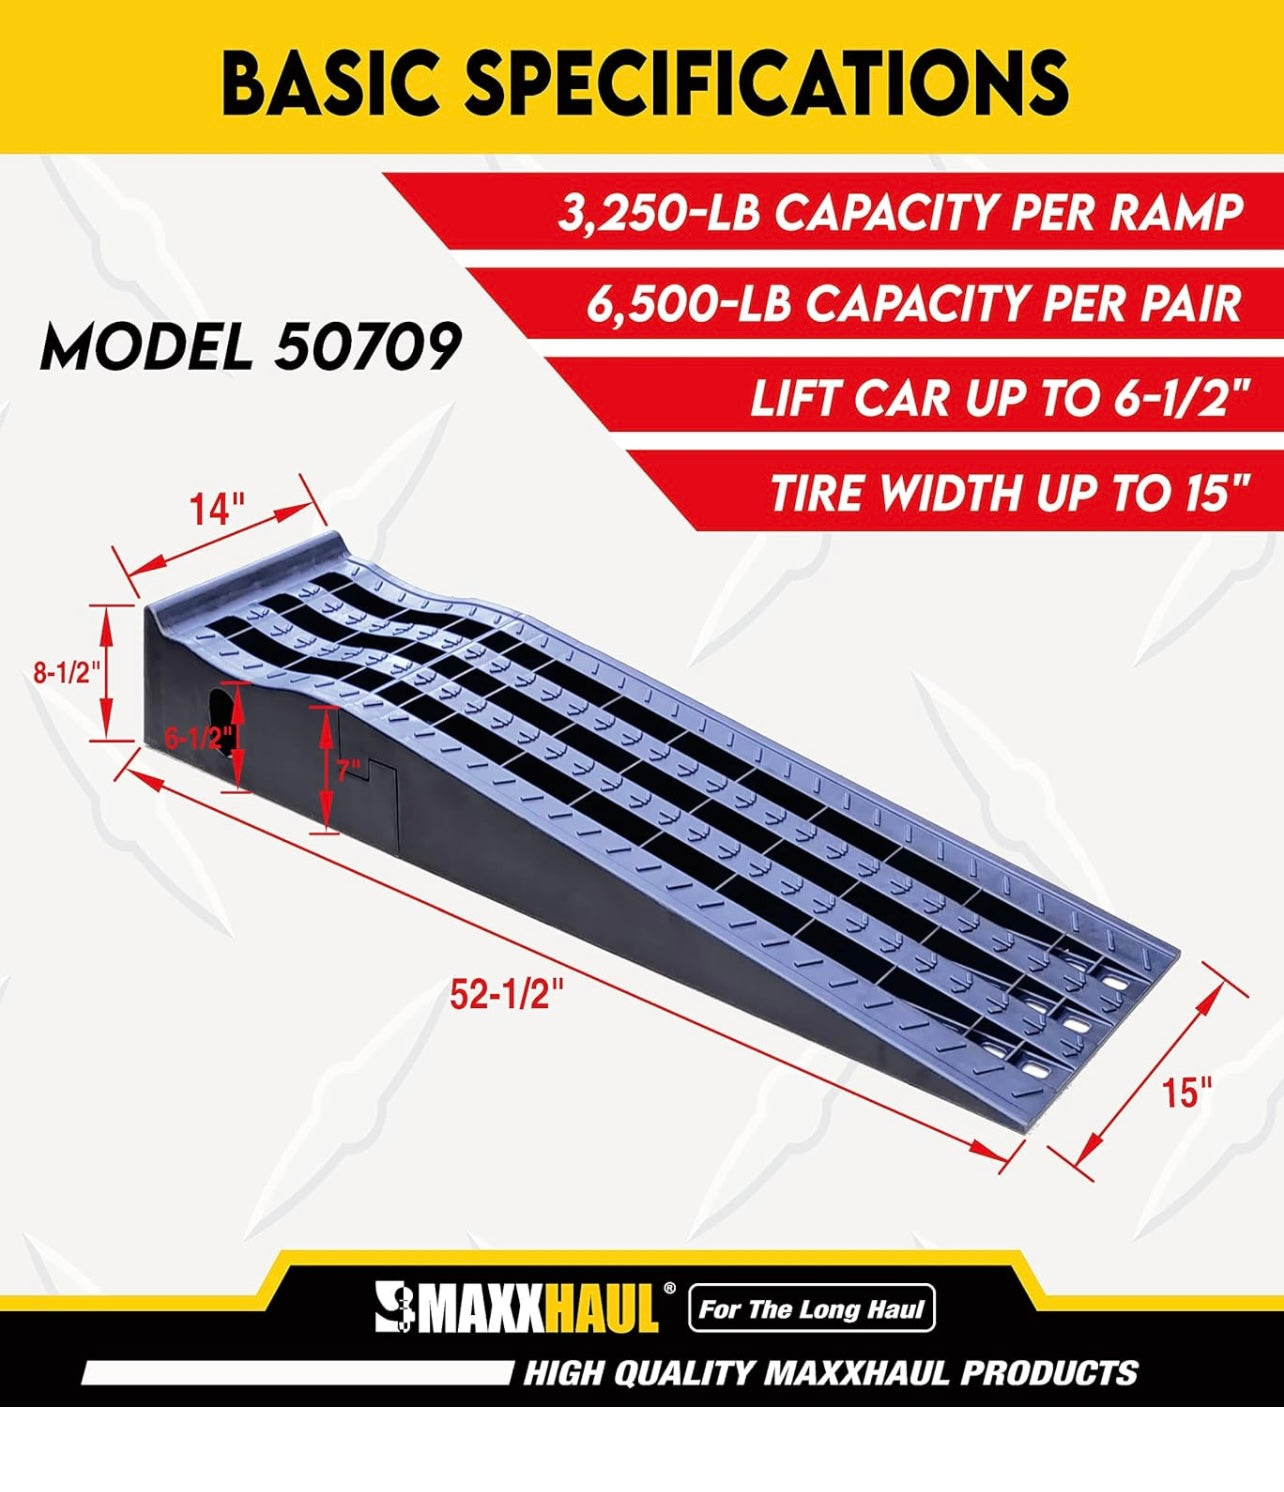 MaxxHaul 50709 Detachable Extendable Car Ramp Set, Portable Car Ramps With 3,250 lbs Maximum Weight Capacity Per Ramp 6,500 lbs Per Pair